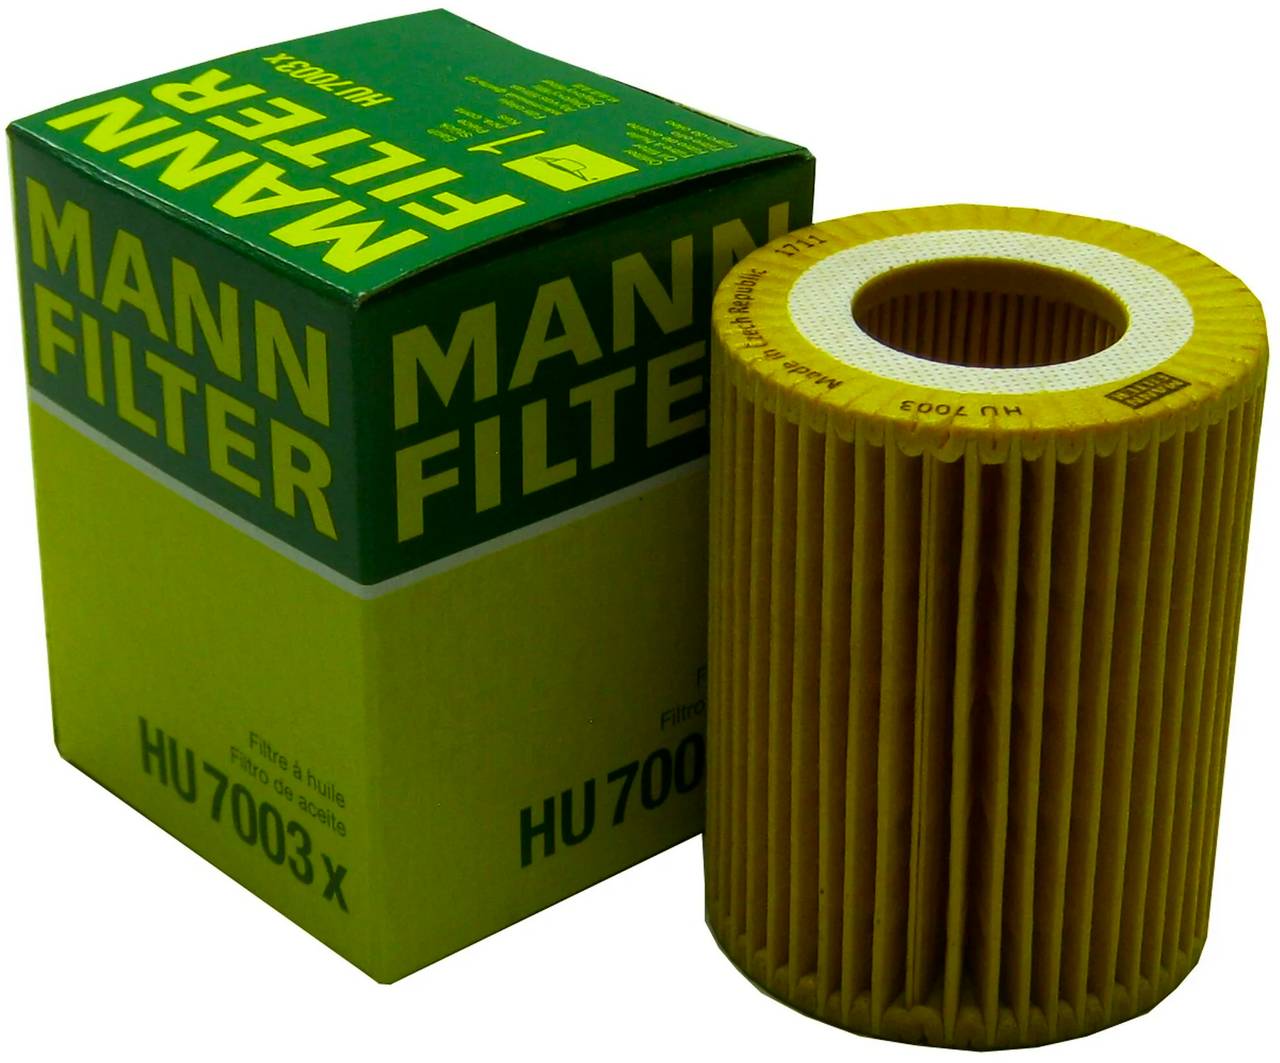 Фильтр очистки масла MANN HU7003x